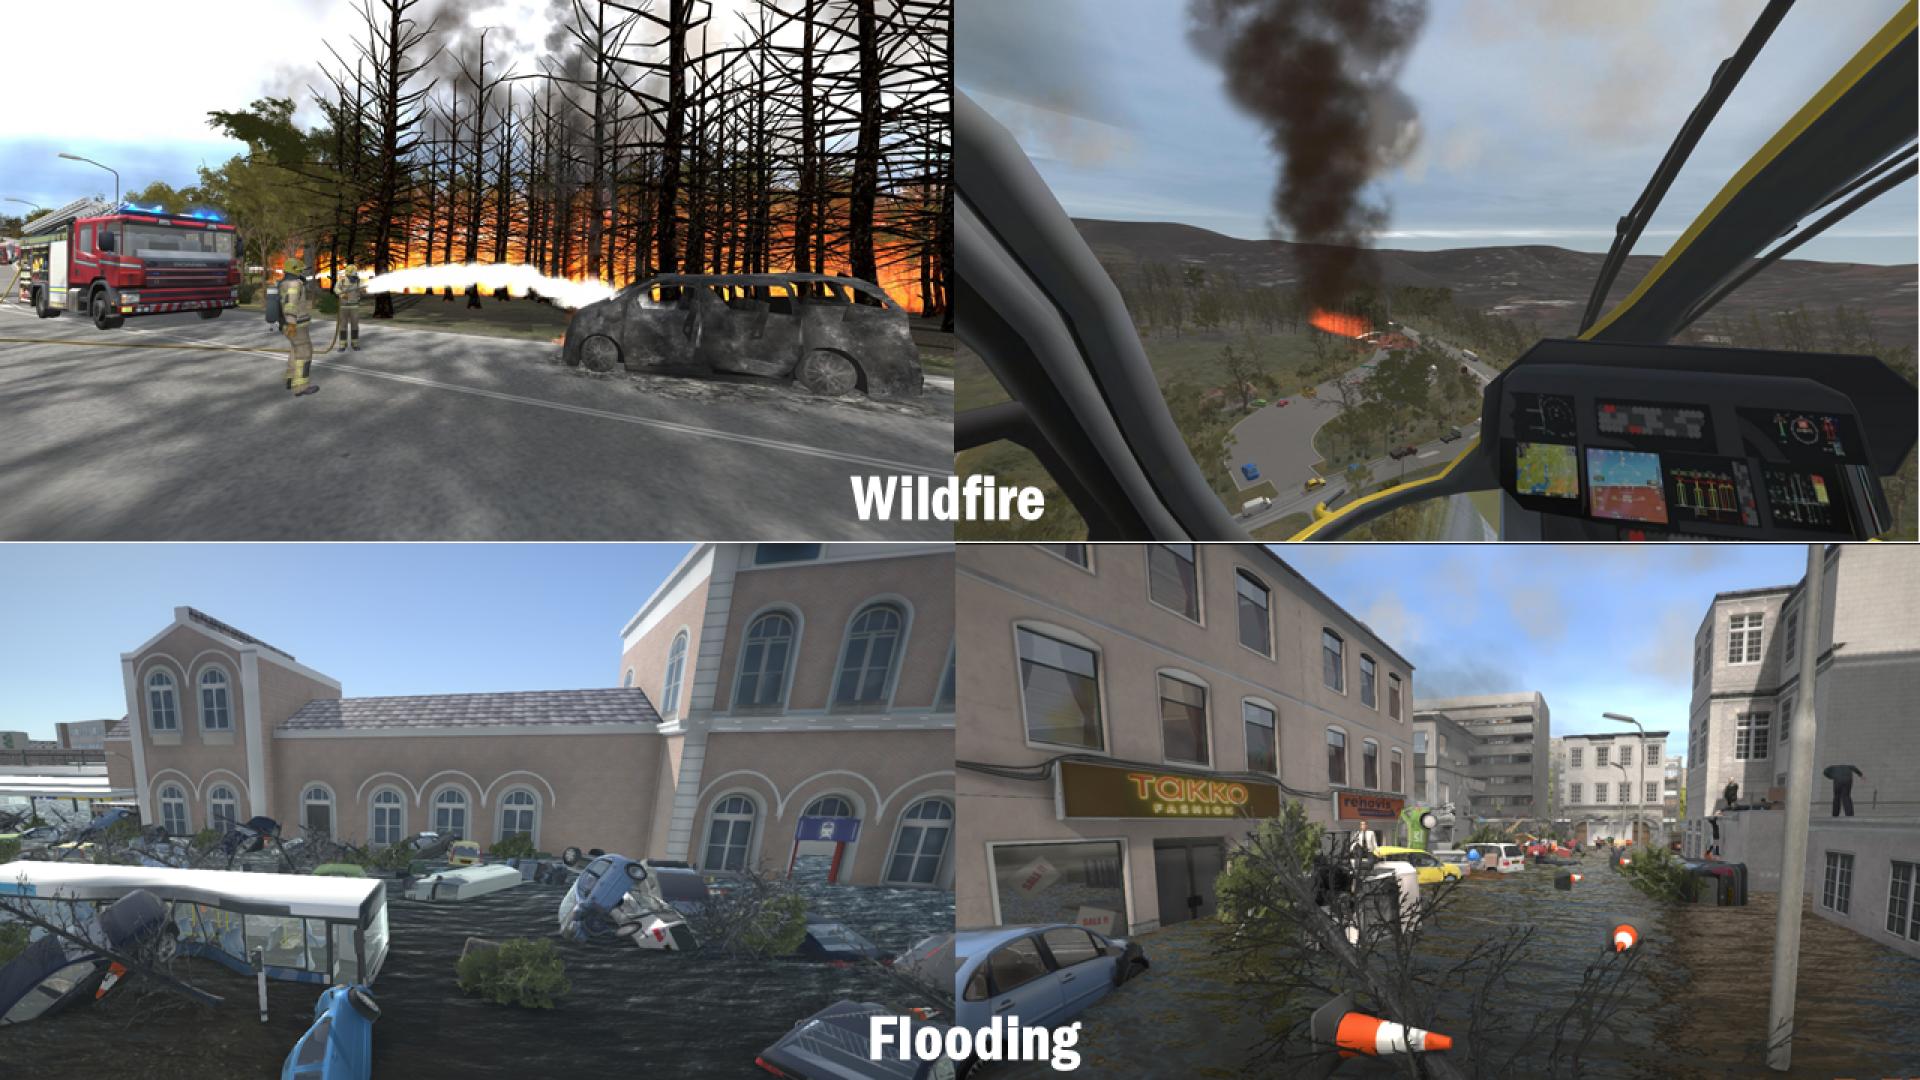 Screenshots of natural disaster scenes